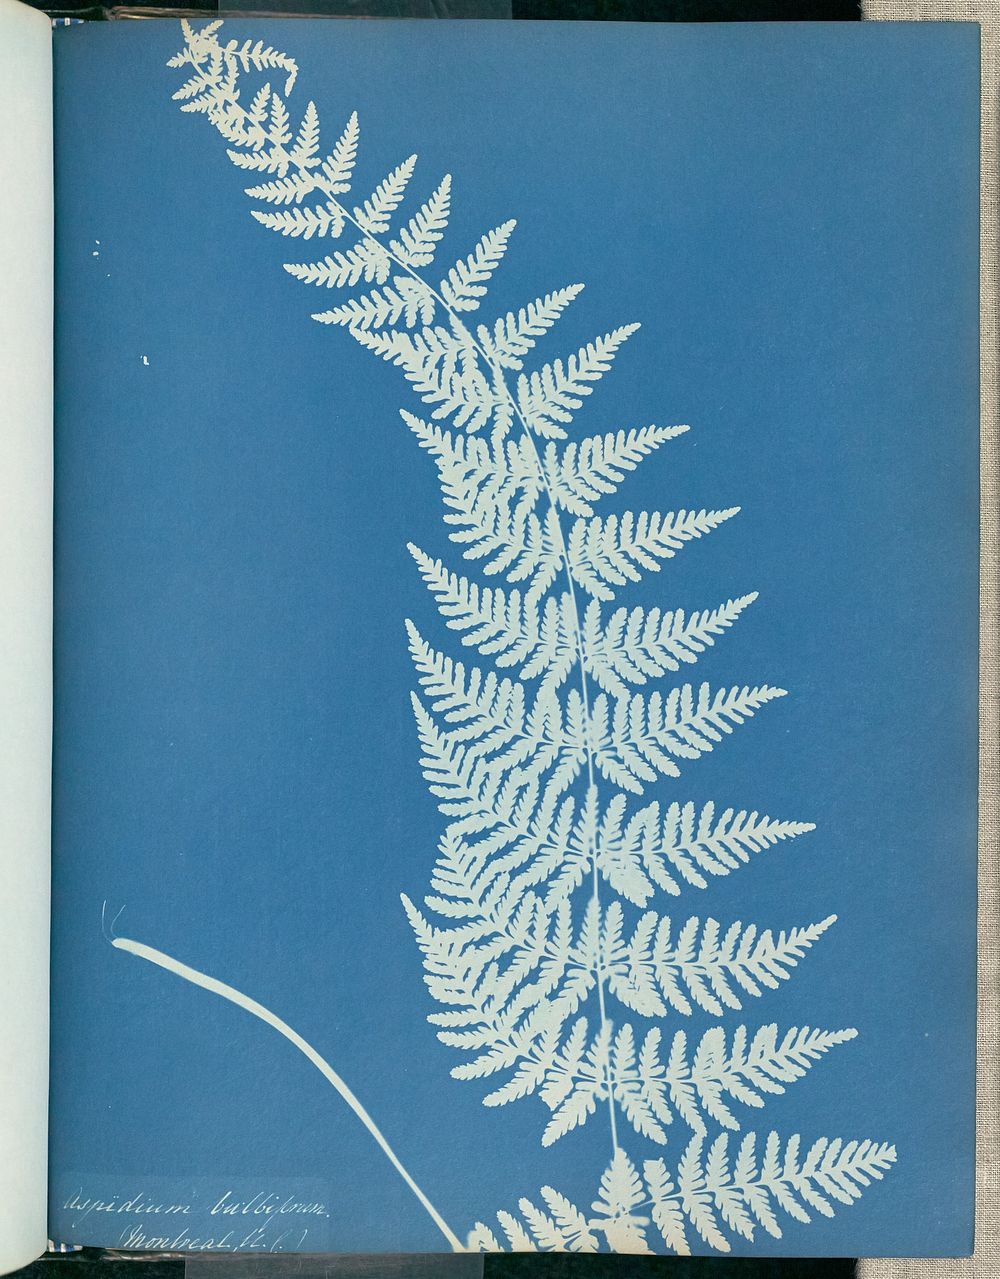 Aspidium bulbiferum, Montreal by Anna Atkins and Anne Dixon